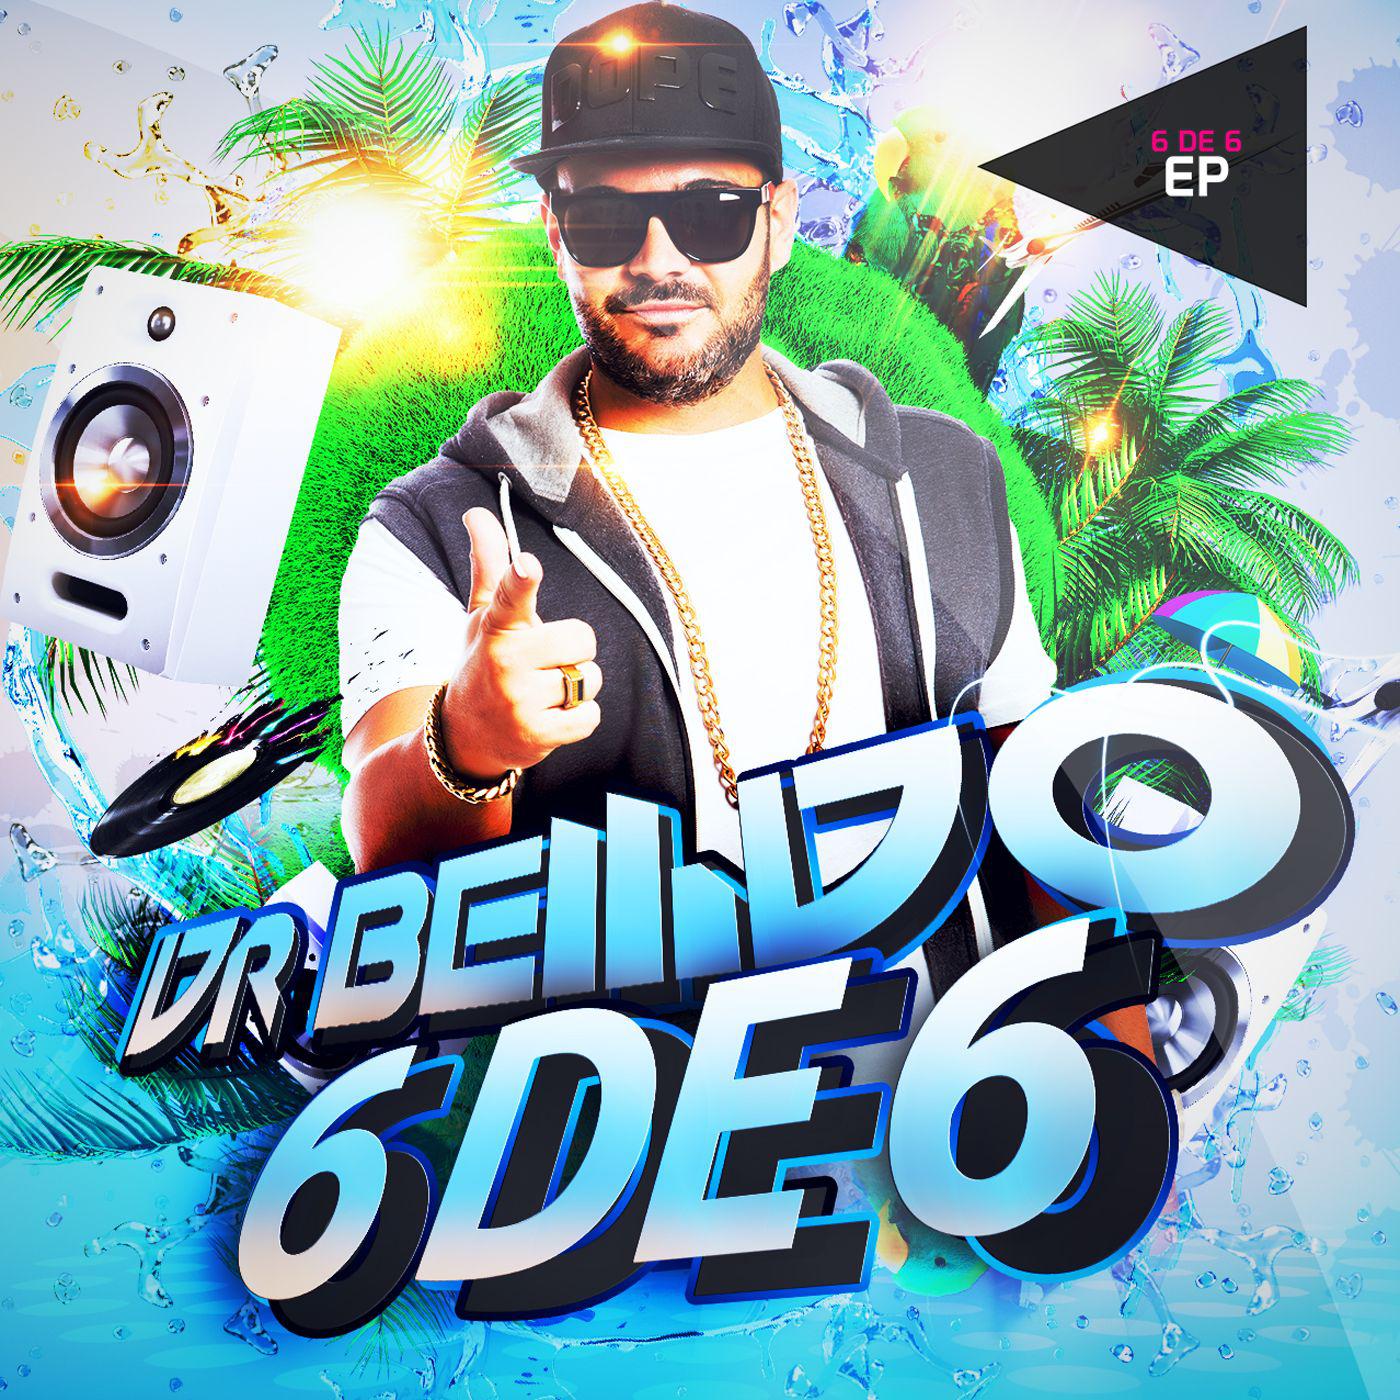 Dr. Bellido - Noche loca (Radio edit)